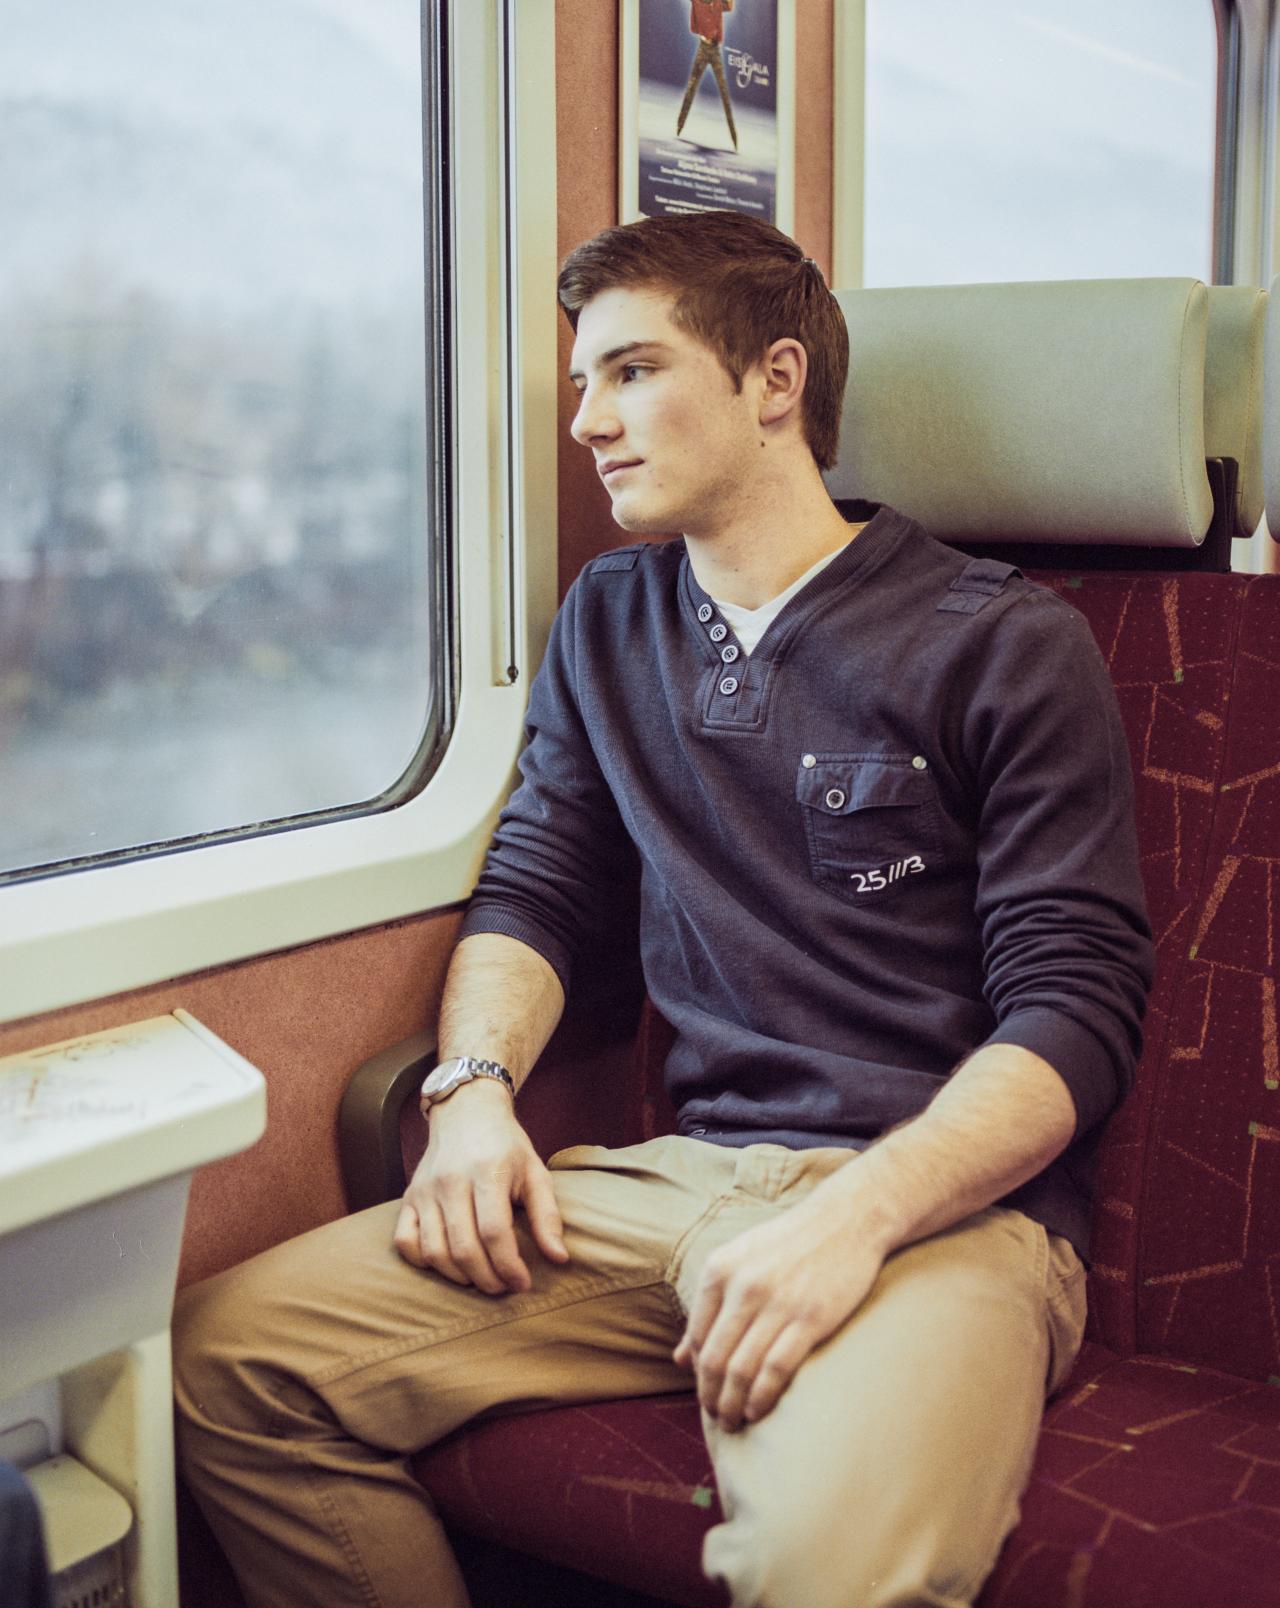 man in train